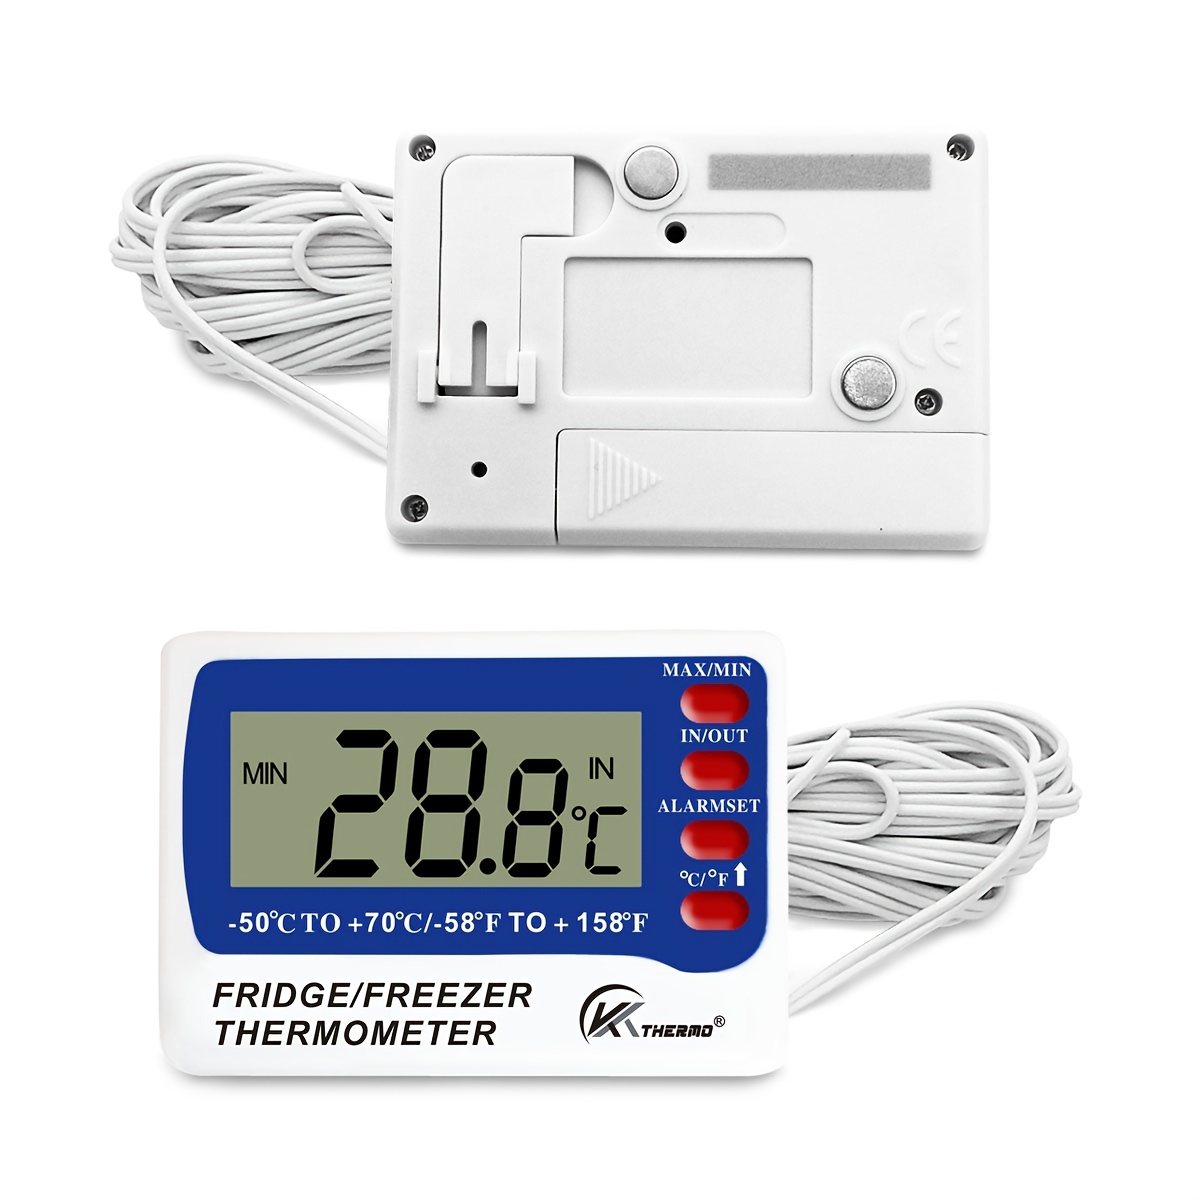 Fridge Refrigerator Thermometer Freezer Room Thermometer Min